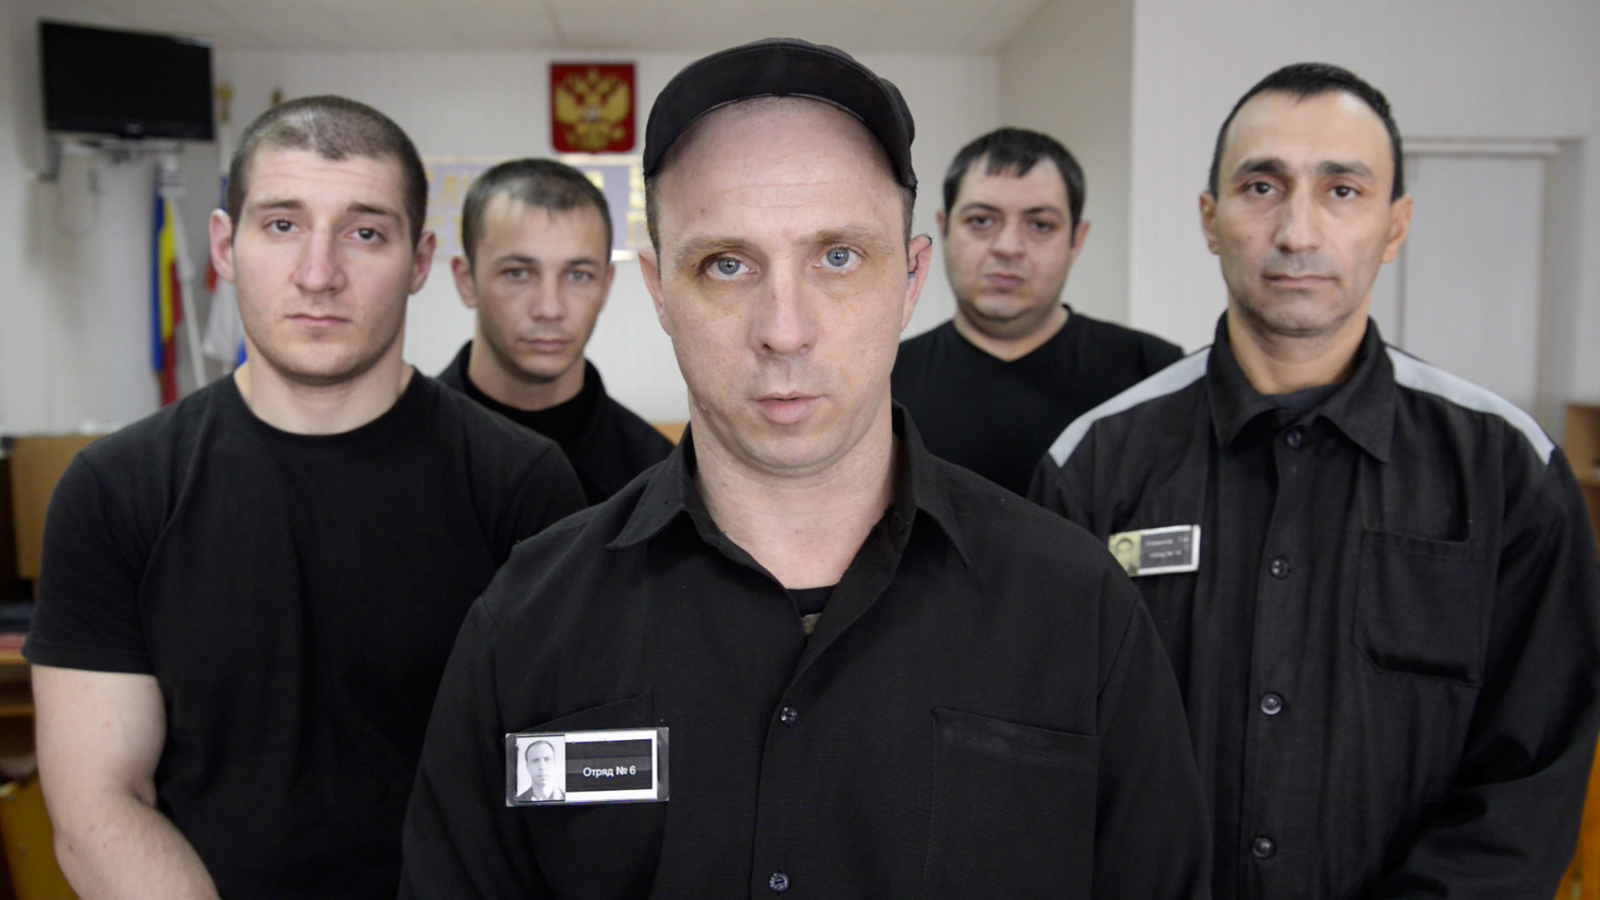 02 Leber Chesworth Mayakovskys Prisoners FIN 5022 w 900h